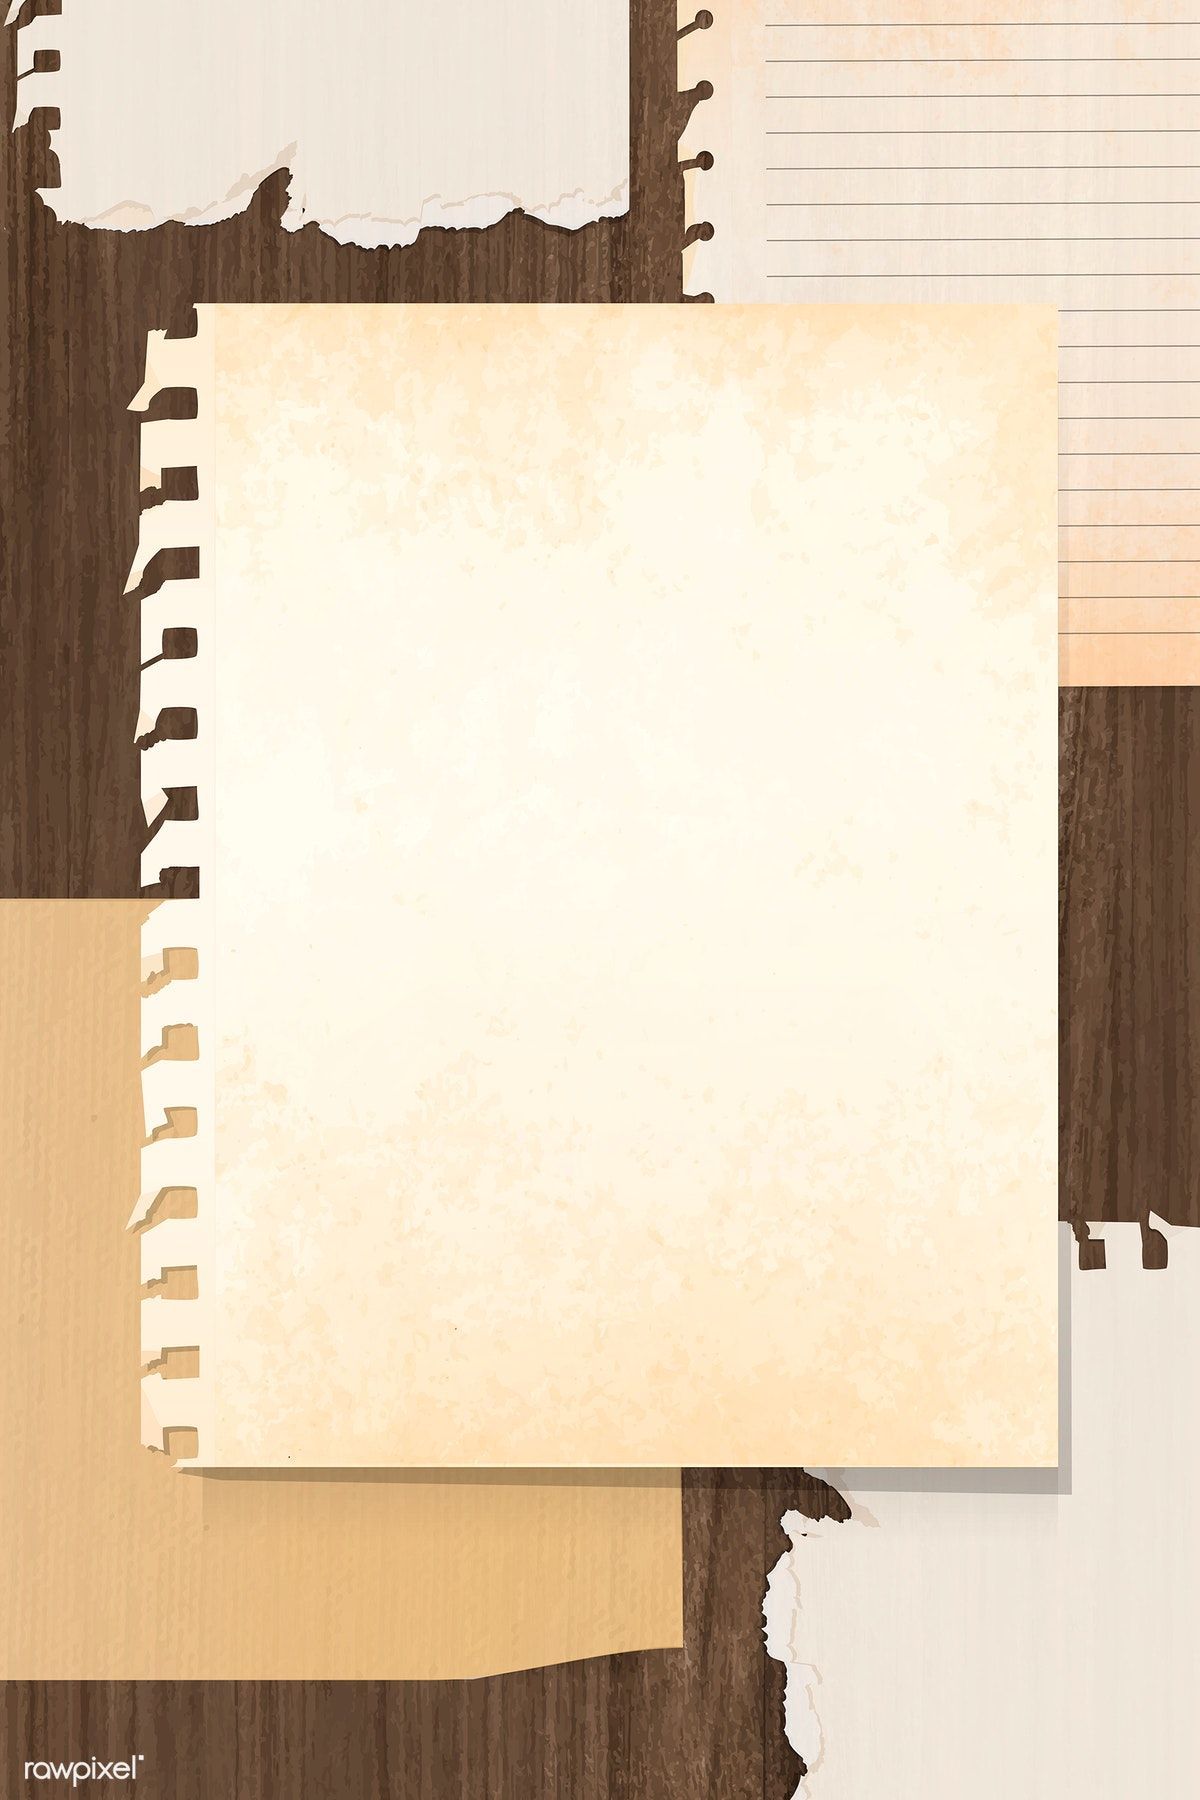 Vintage brown note paper vector. premium image / Kappy Kappy #vector #vectoart #d. Vintage paper background, Note paper, Paper background design